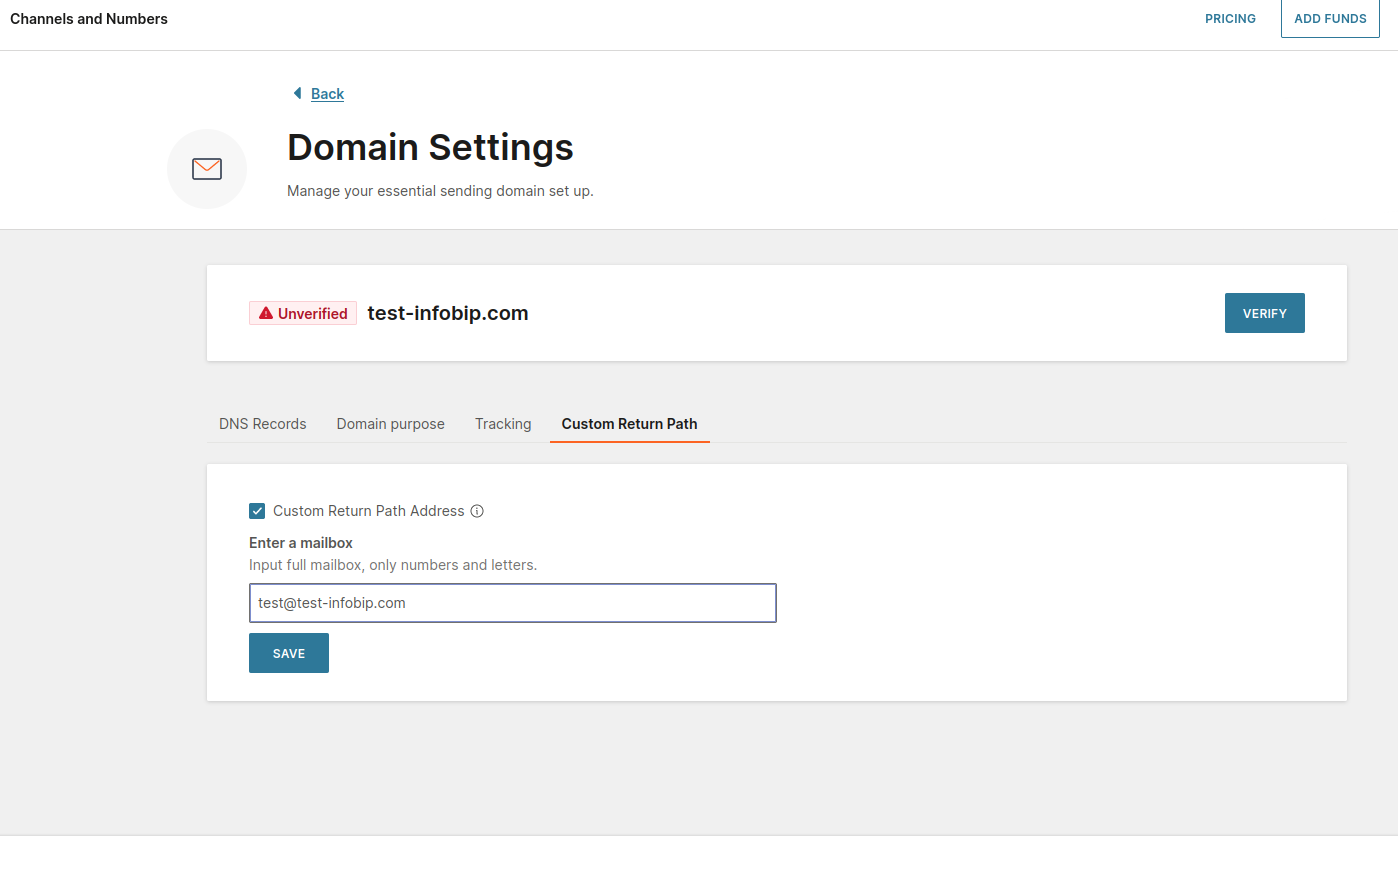 Manage Domain Settings